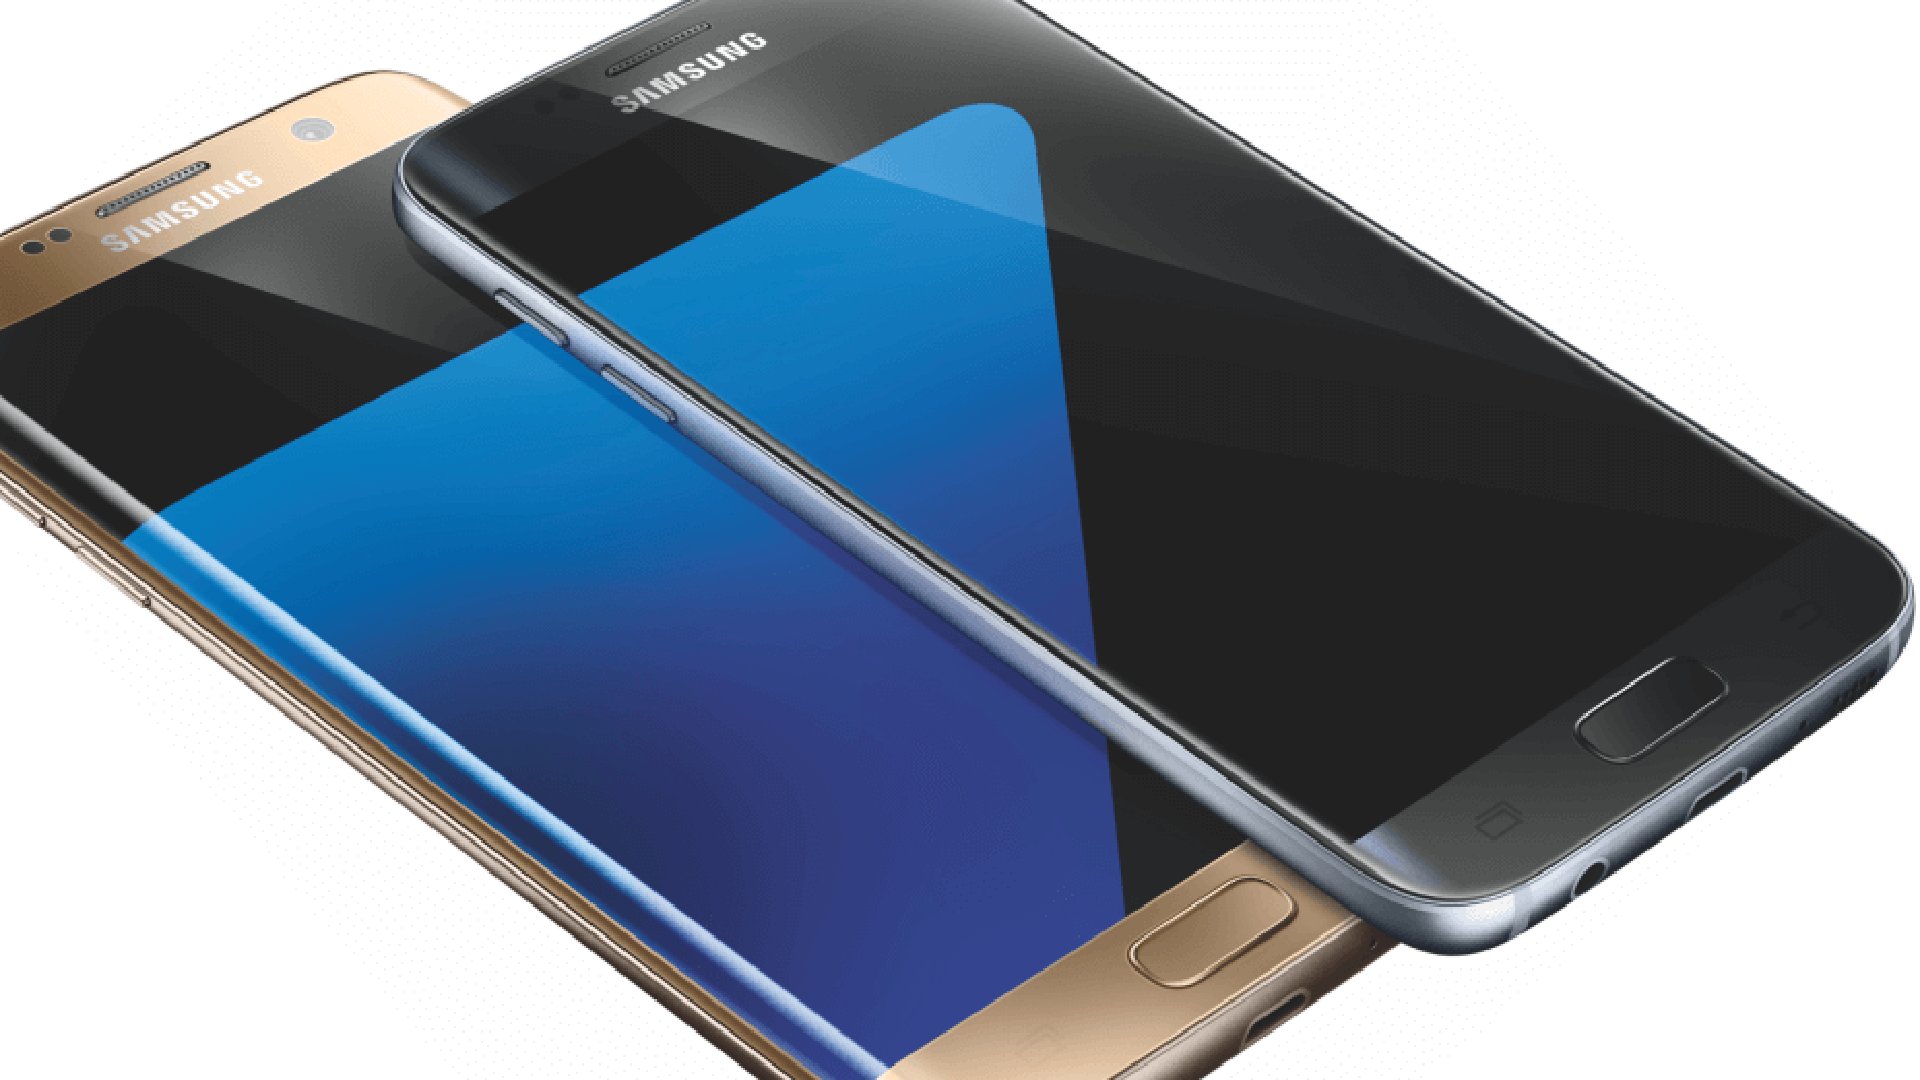 Samsung Galaxy S7 & Galaxy S7 Edge - Leaked Render